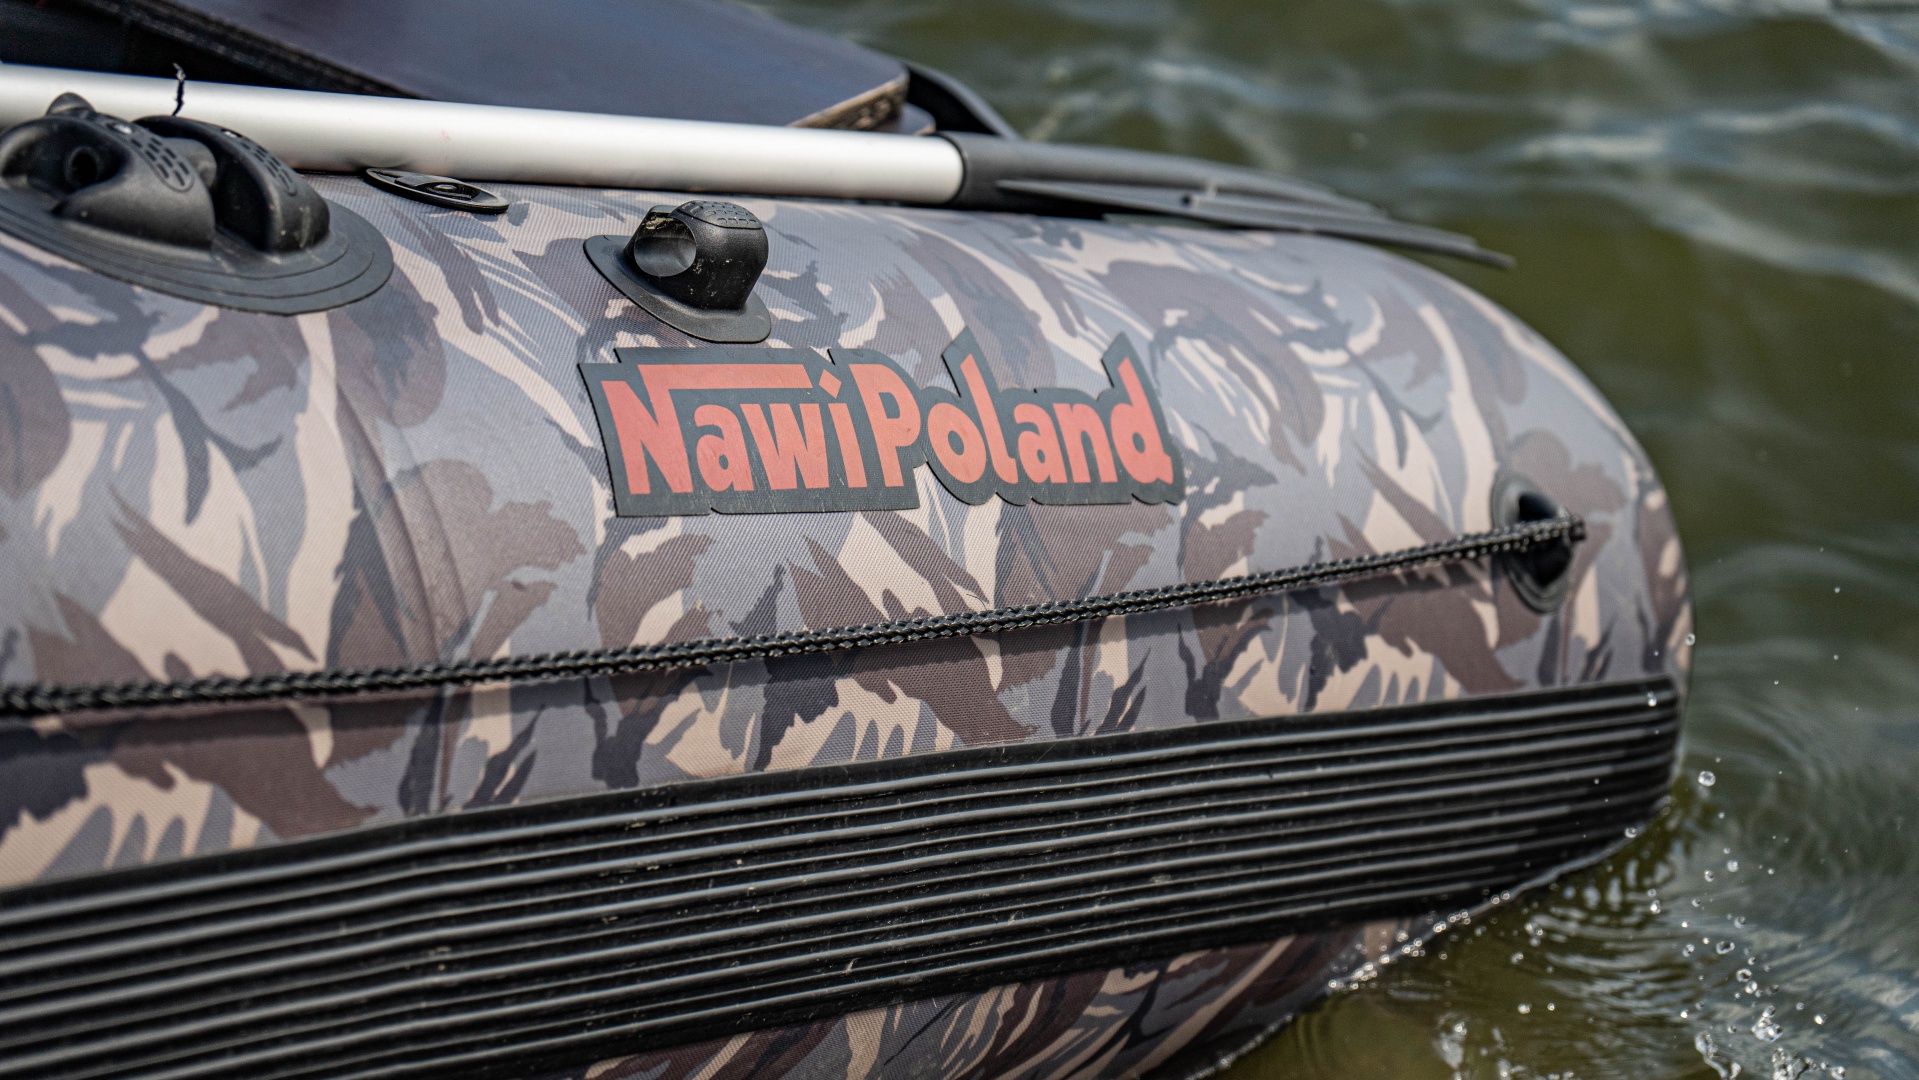 NawiPoland CAT 280 Inflatable Boat  - Catamaran